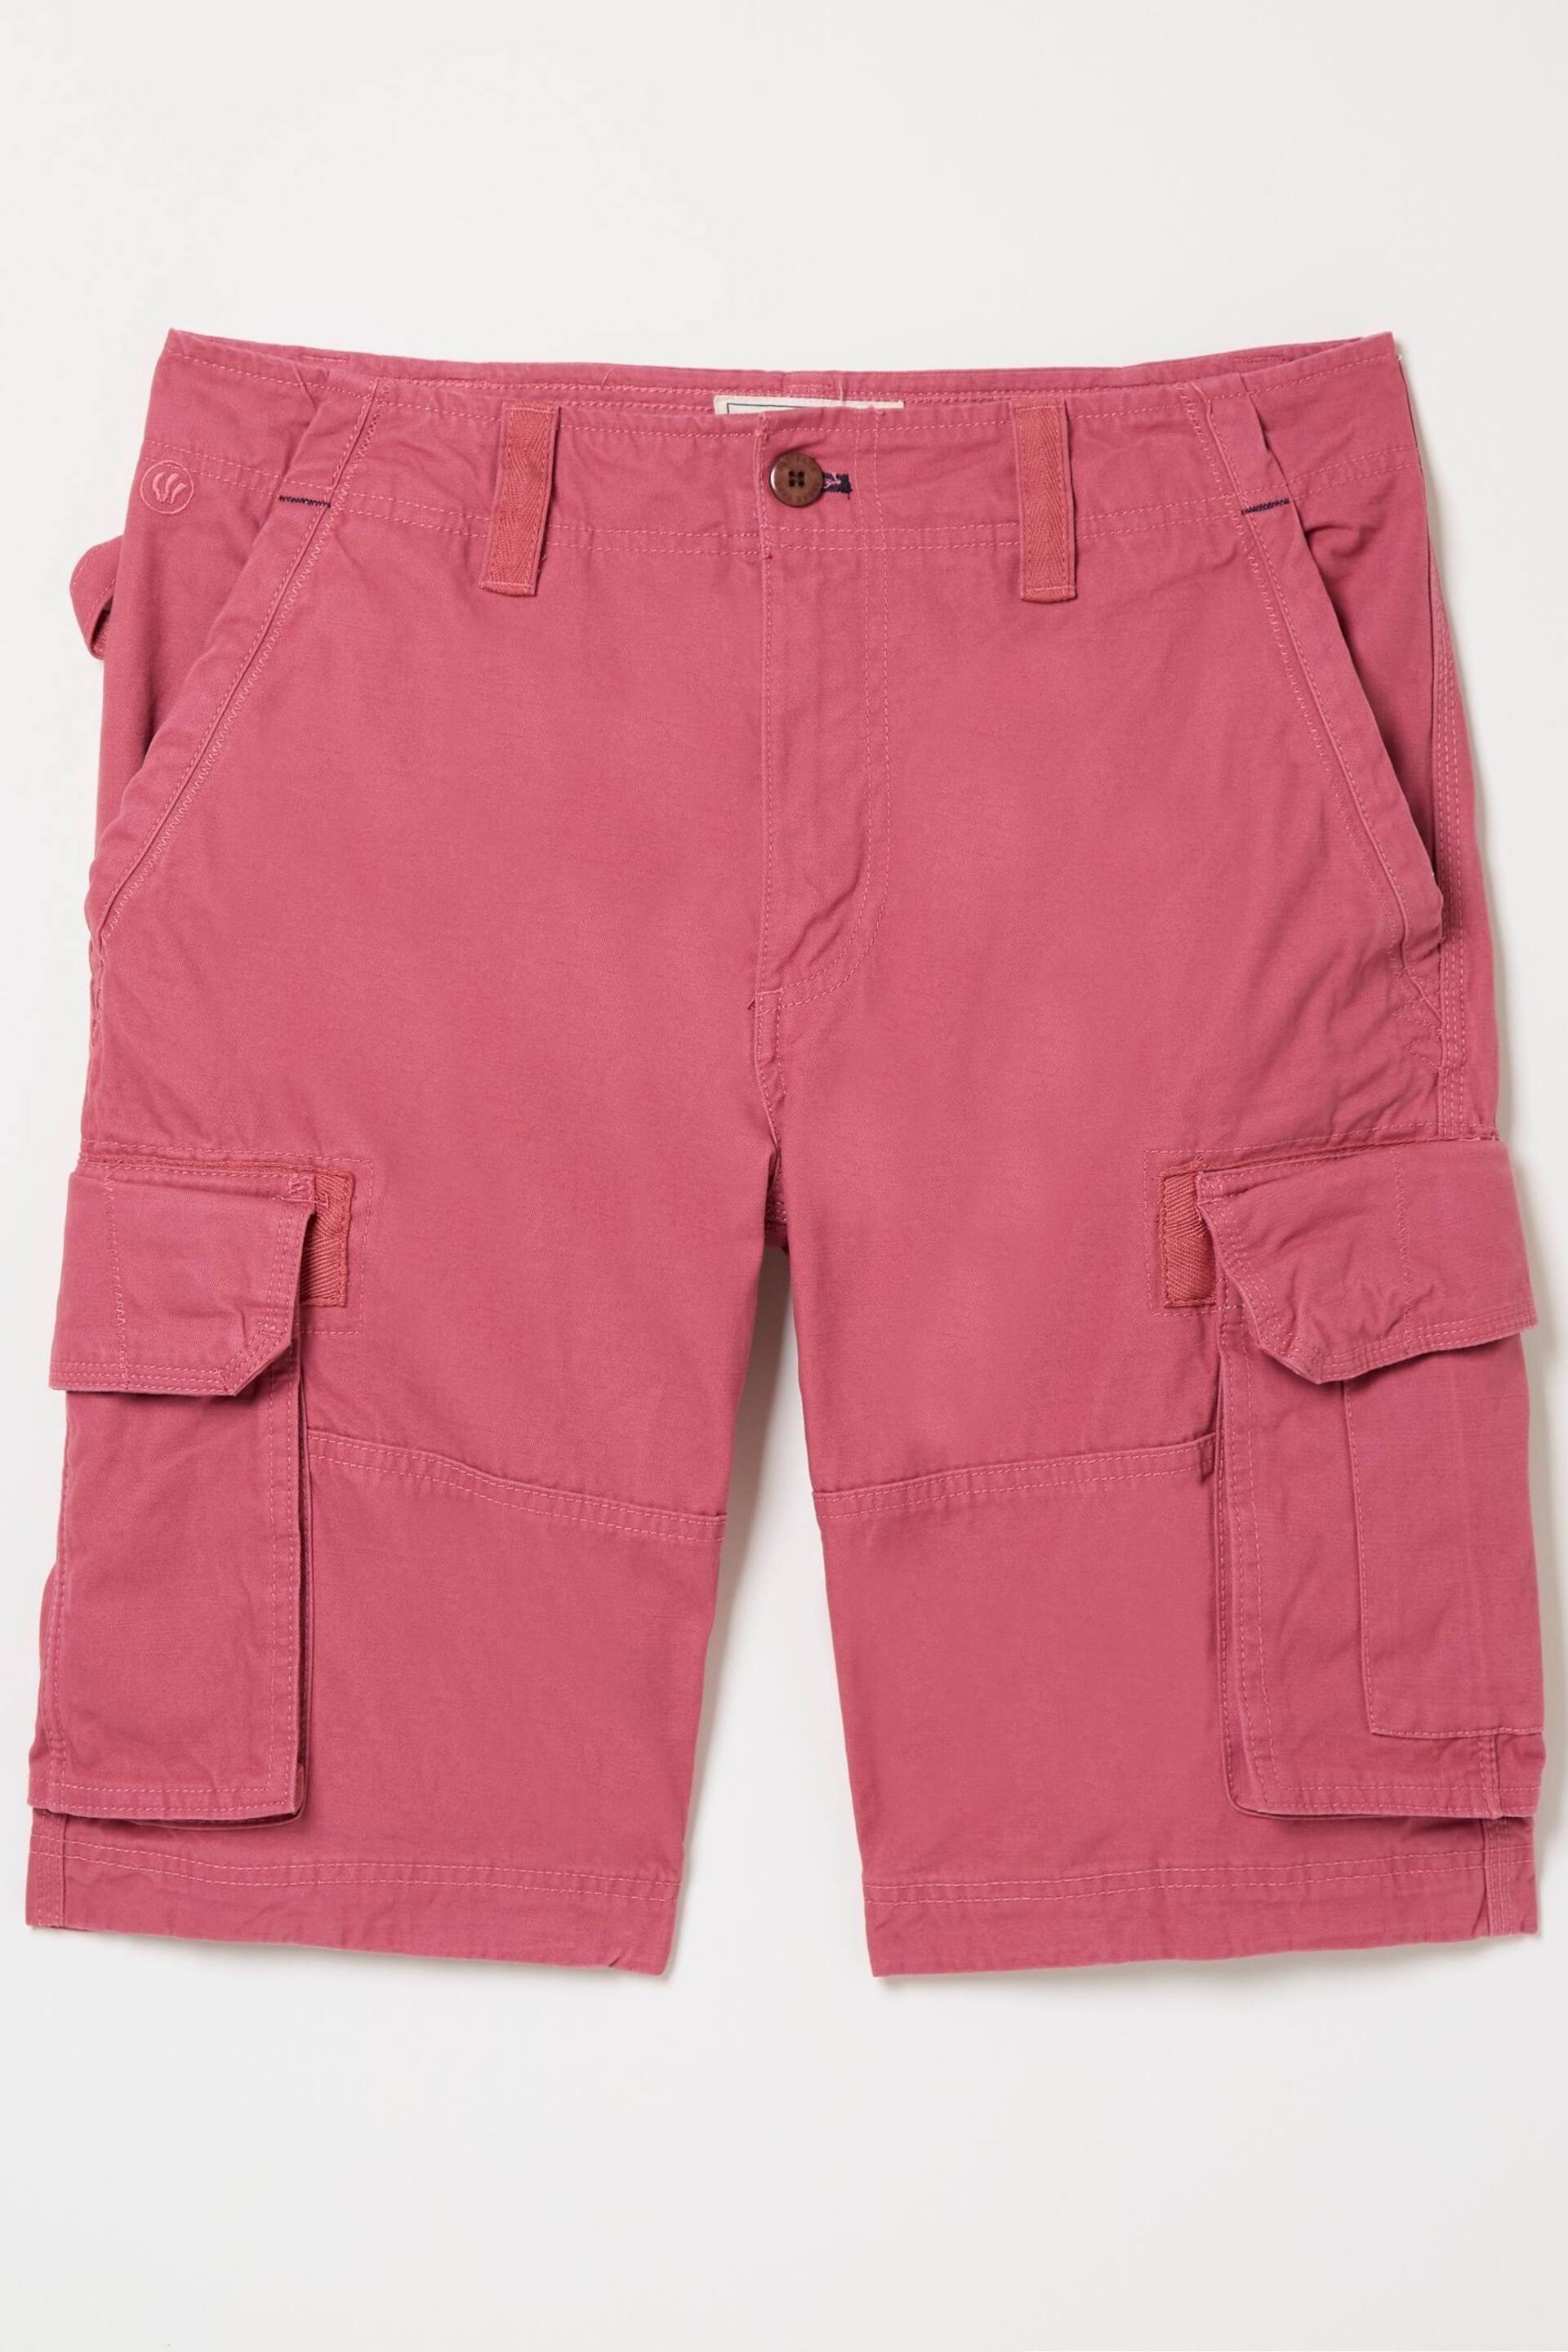 FatFace Pink Breakyard Cargo Shorts - Image 5 of 5